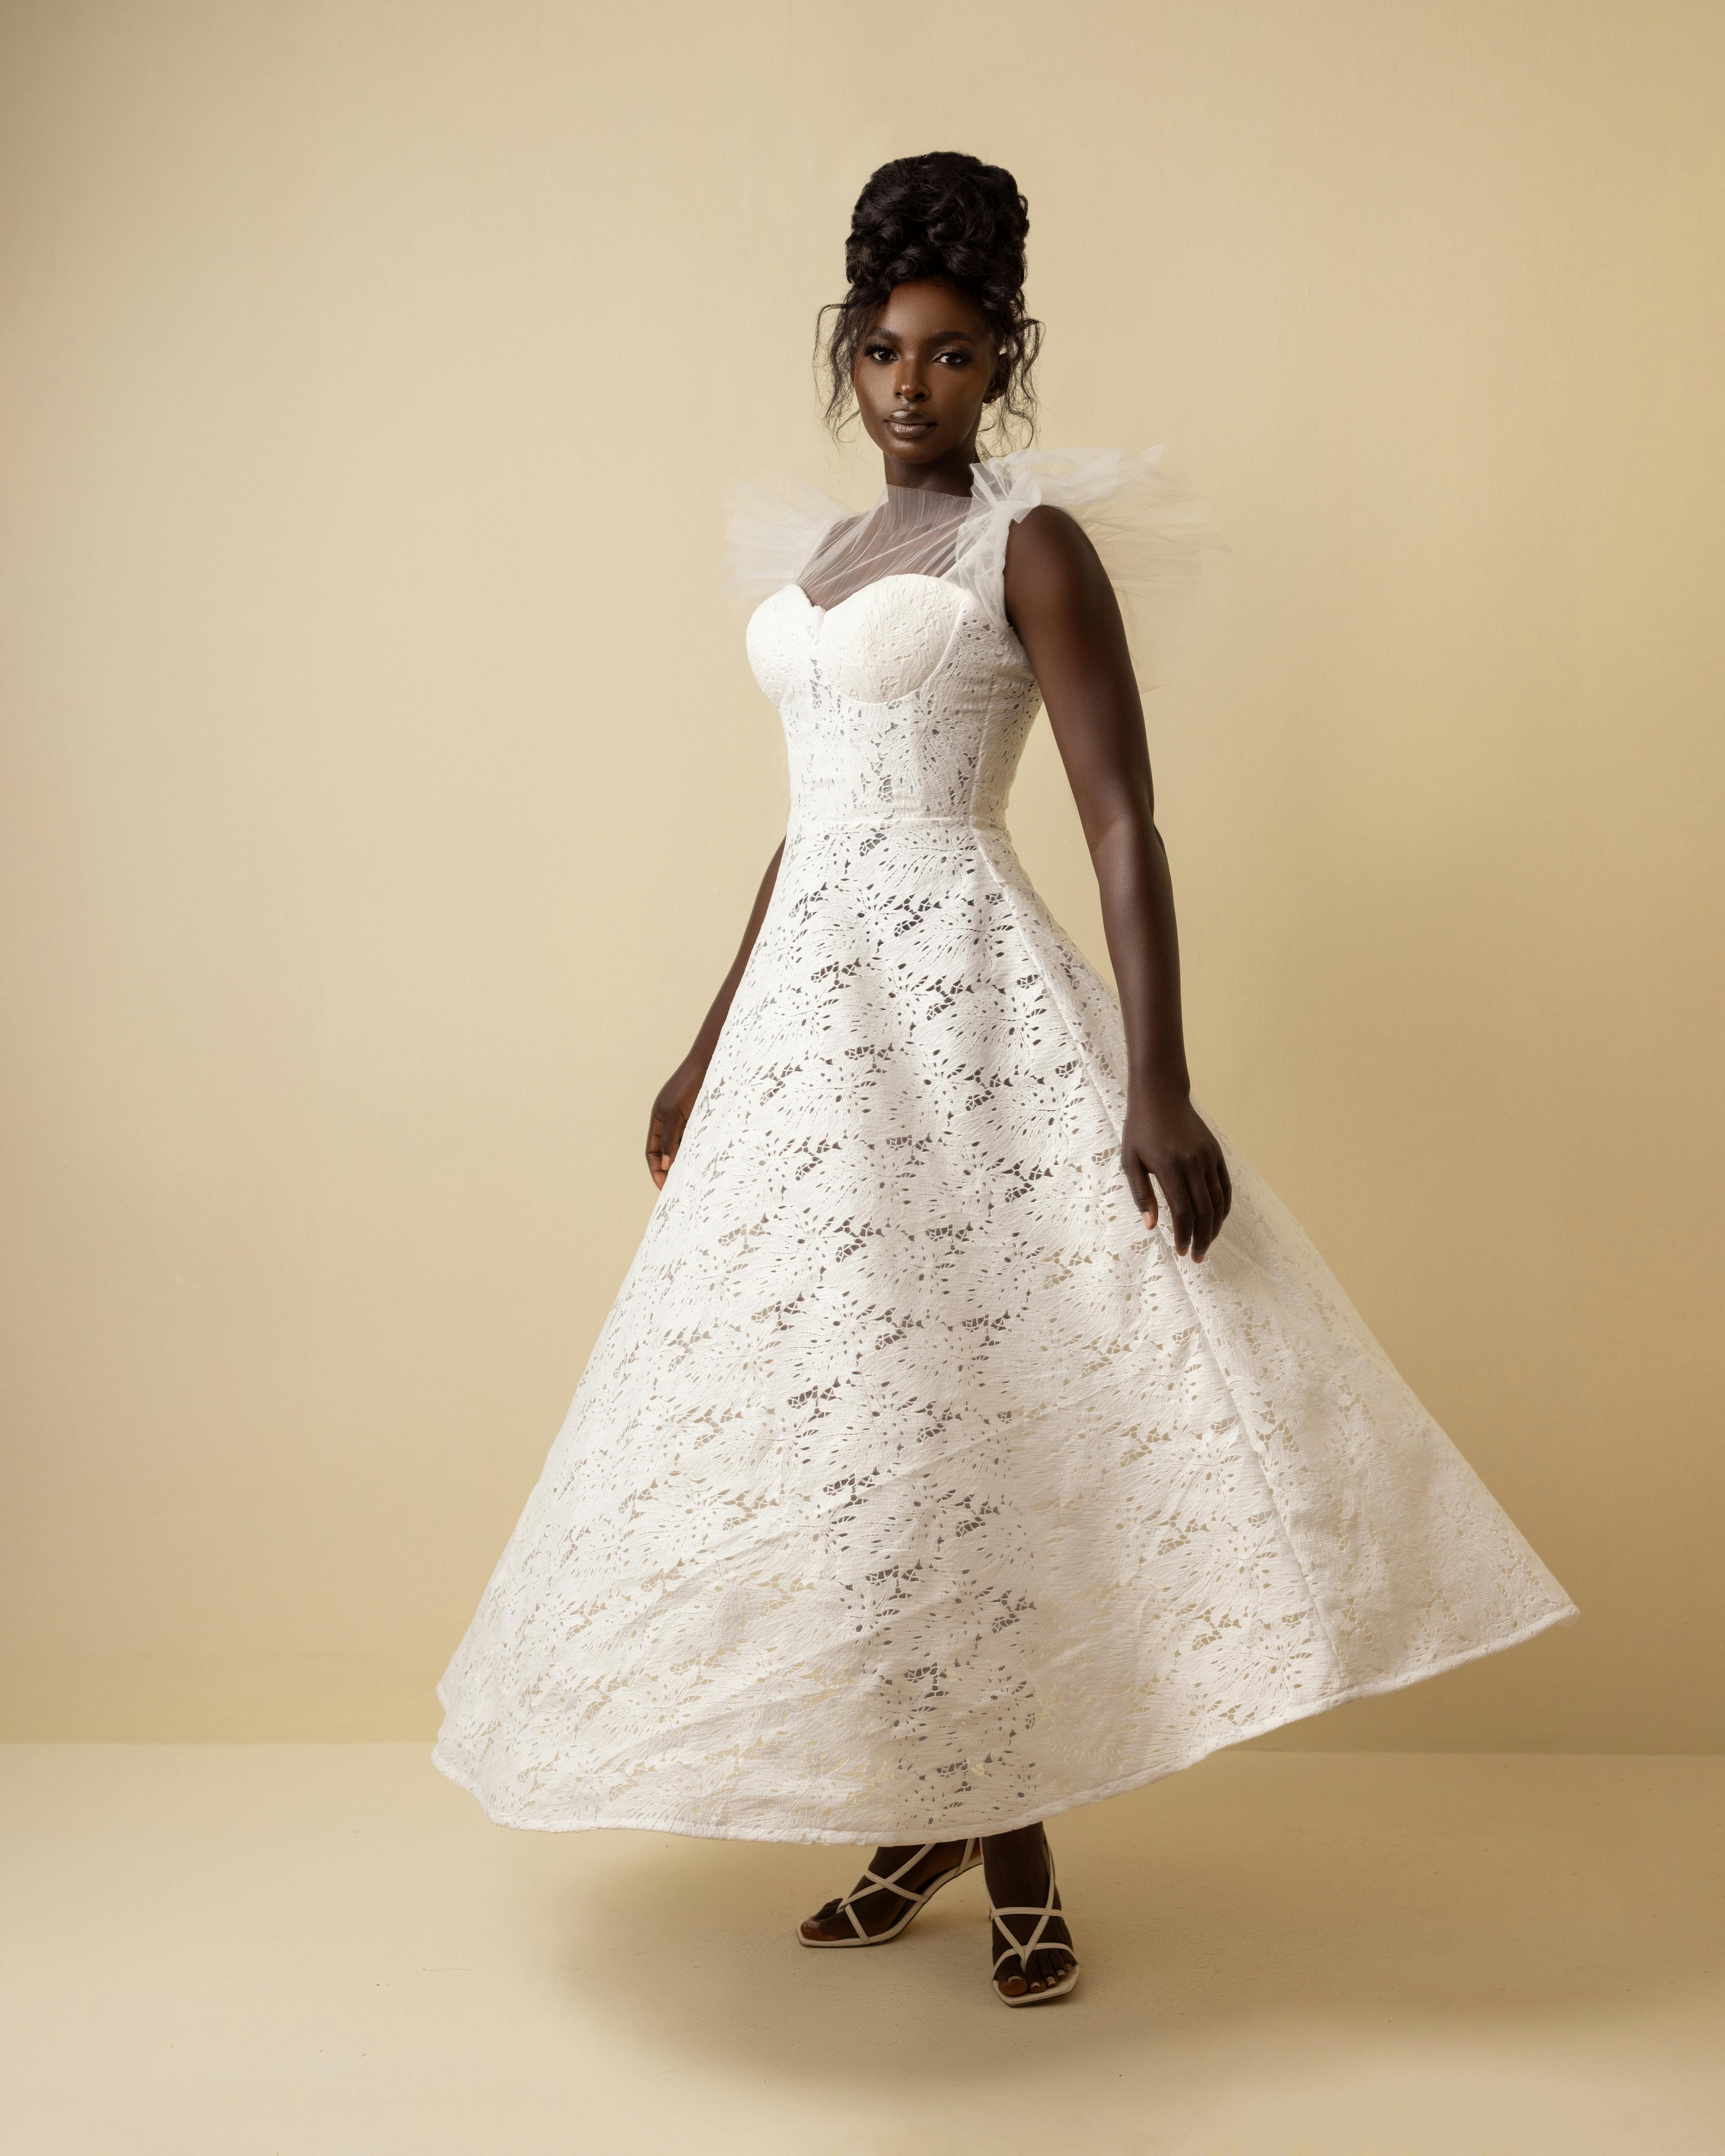 Zio Dress, a product by Knanfe Fashion